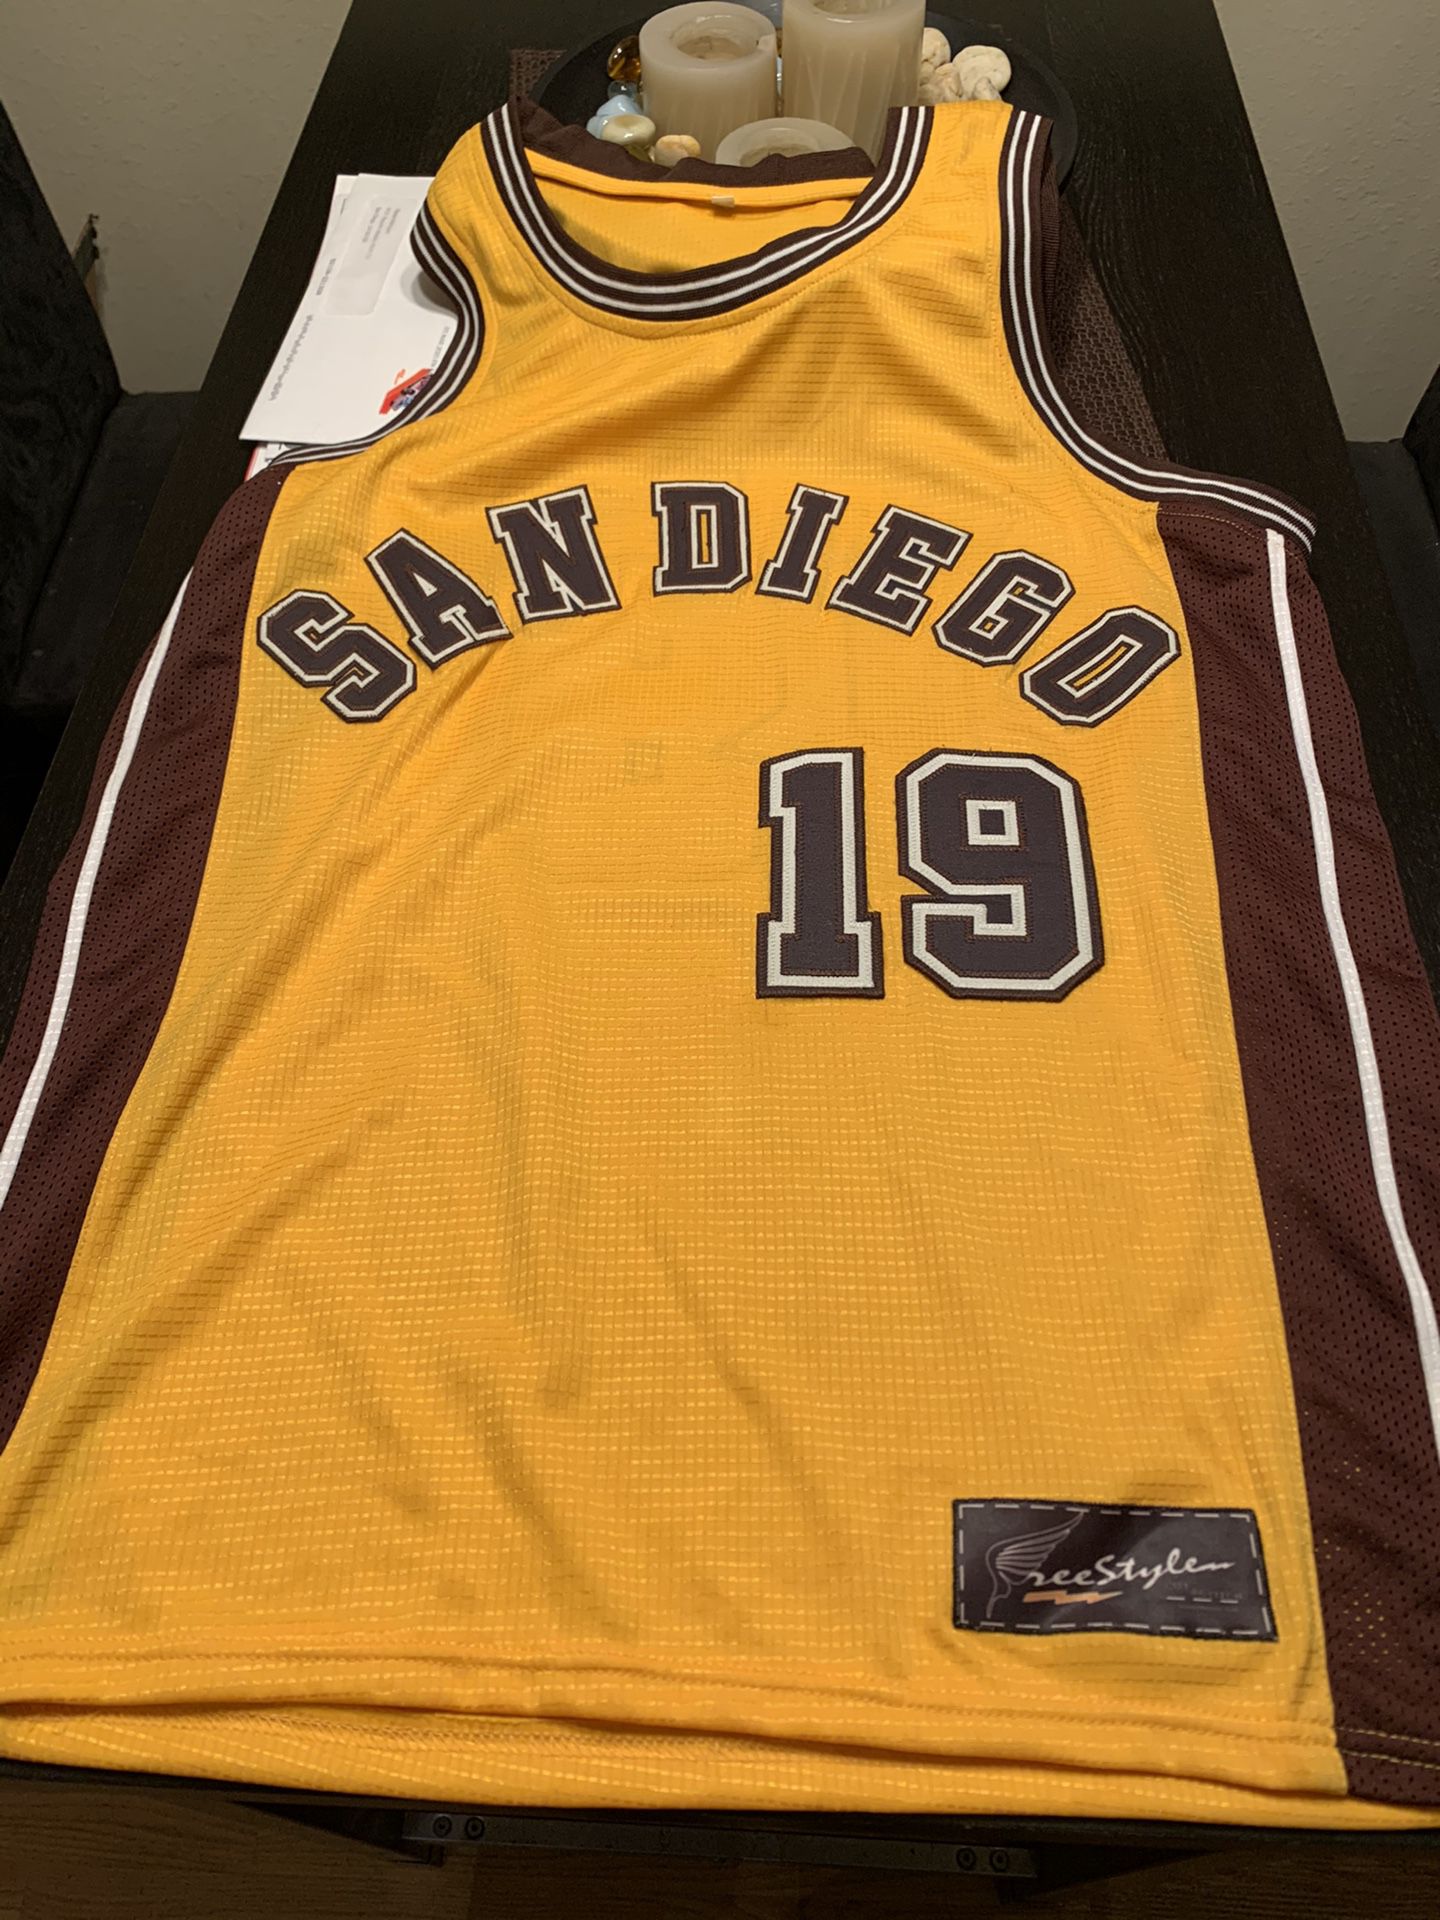 San Diego Padres basketball jersey